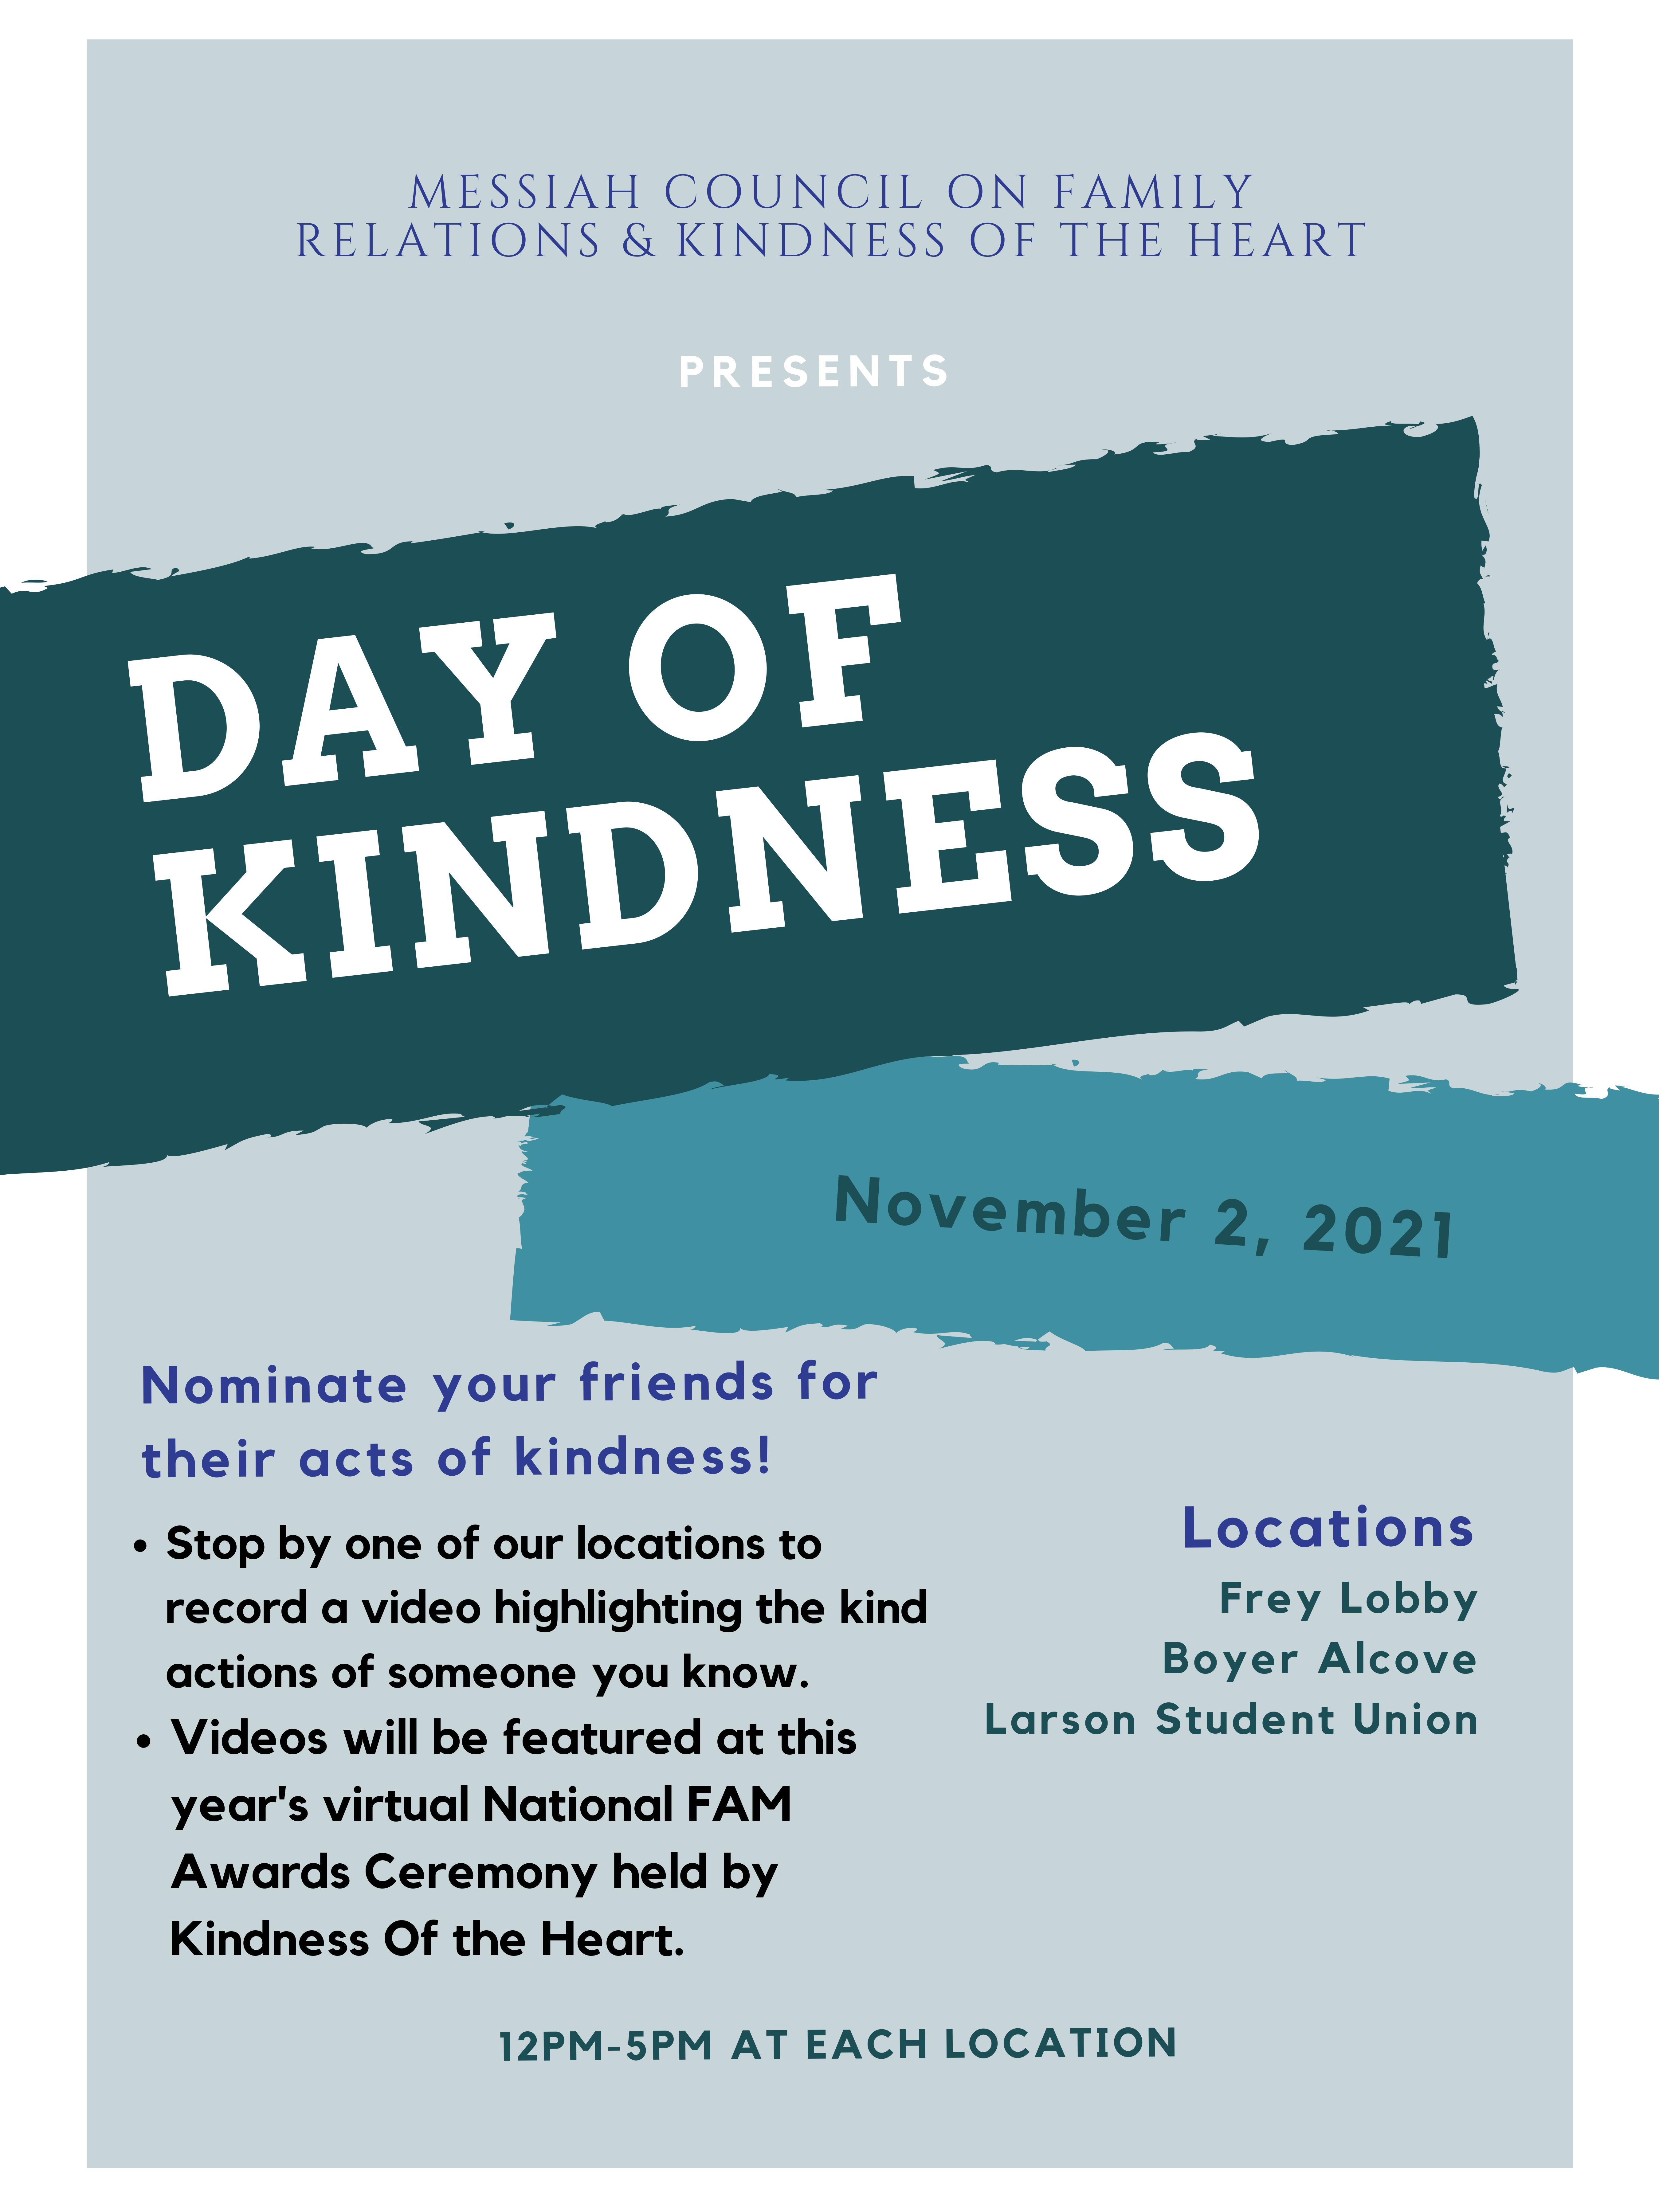 Day of kindness pdf promotional flyer